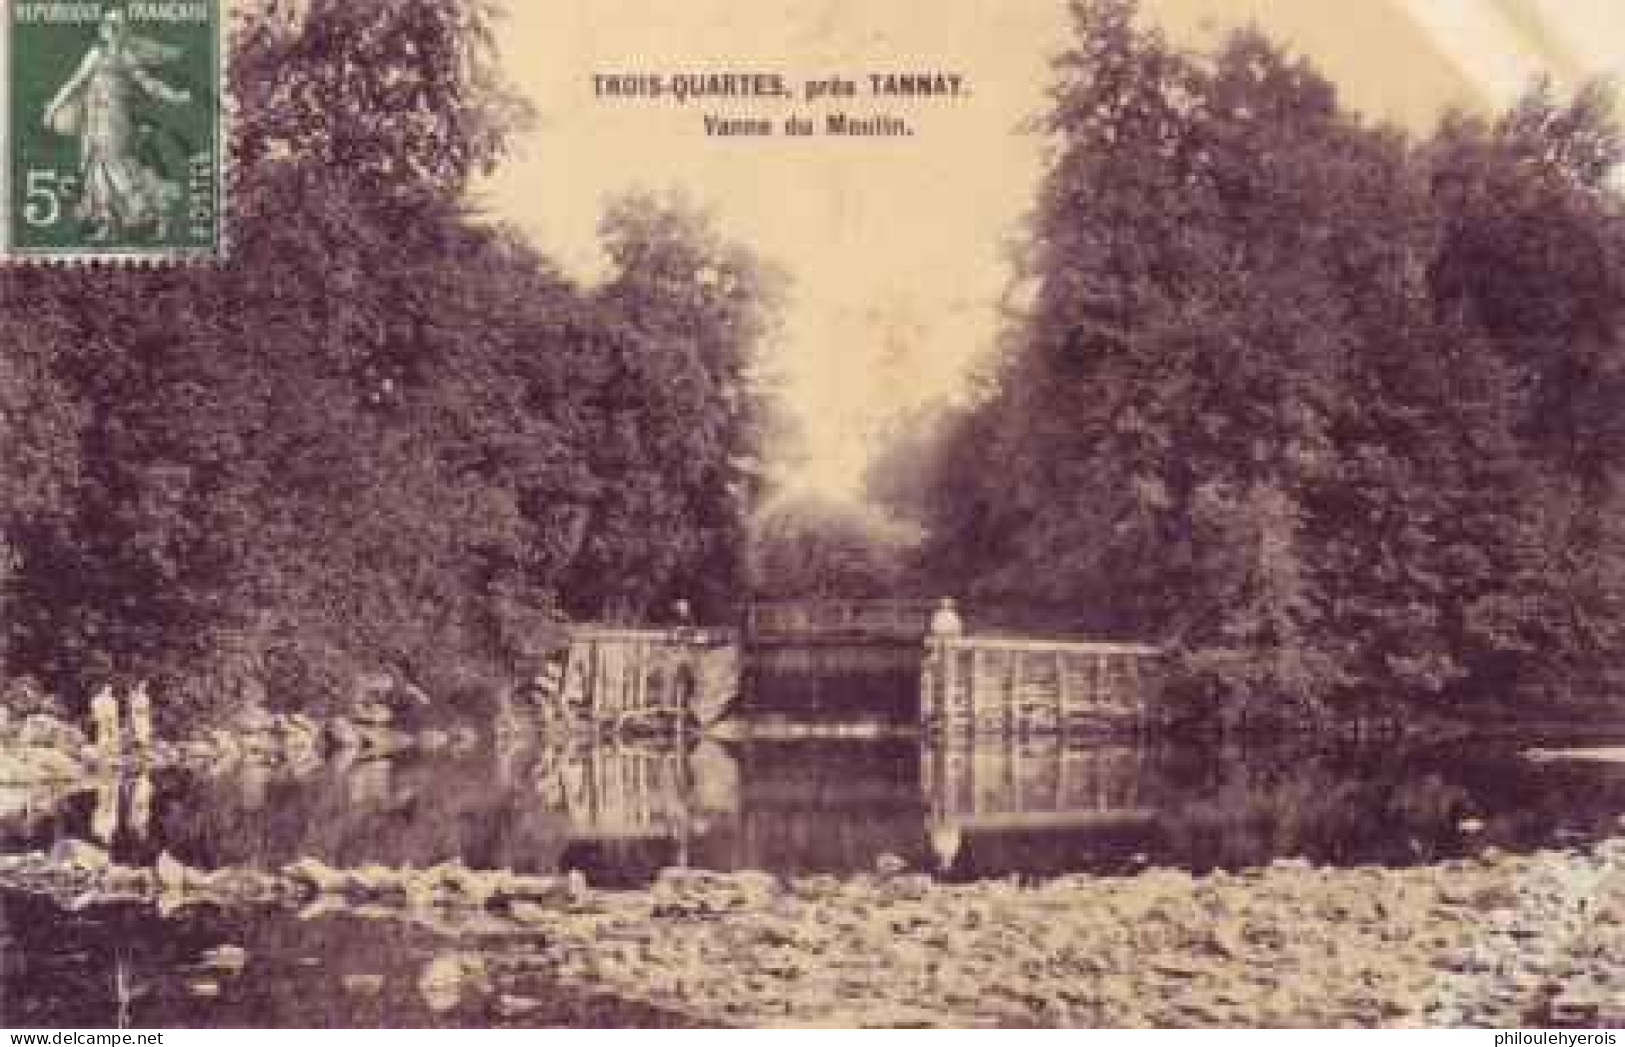 CPA 58 TANNAY -  TROIS-QUARTES Vanne Du Moulin En 1912 - Tannay